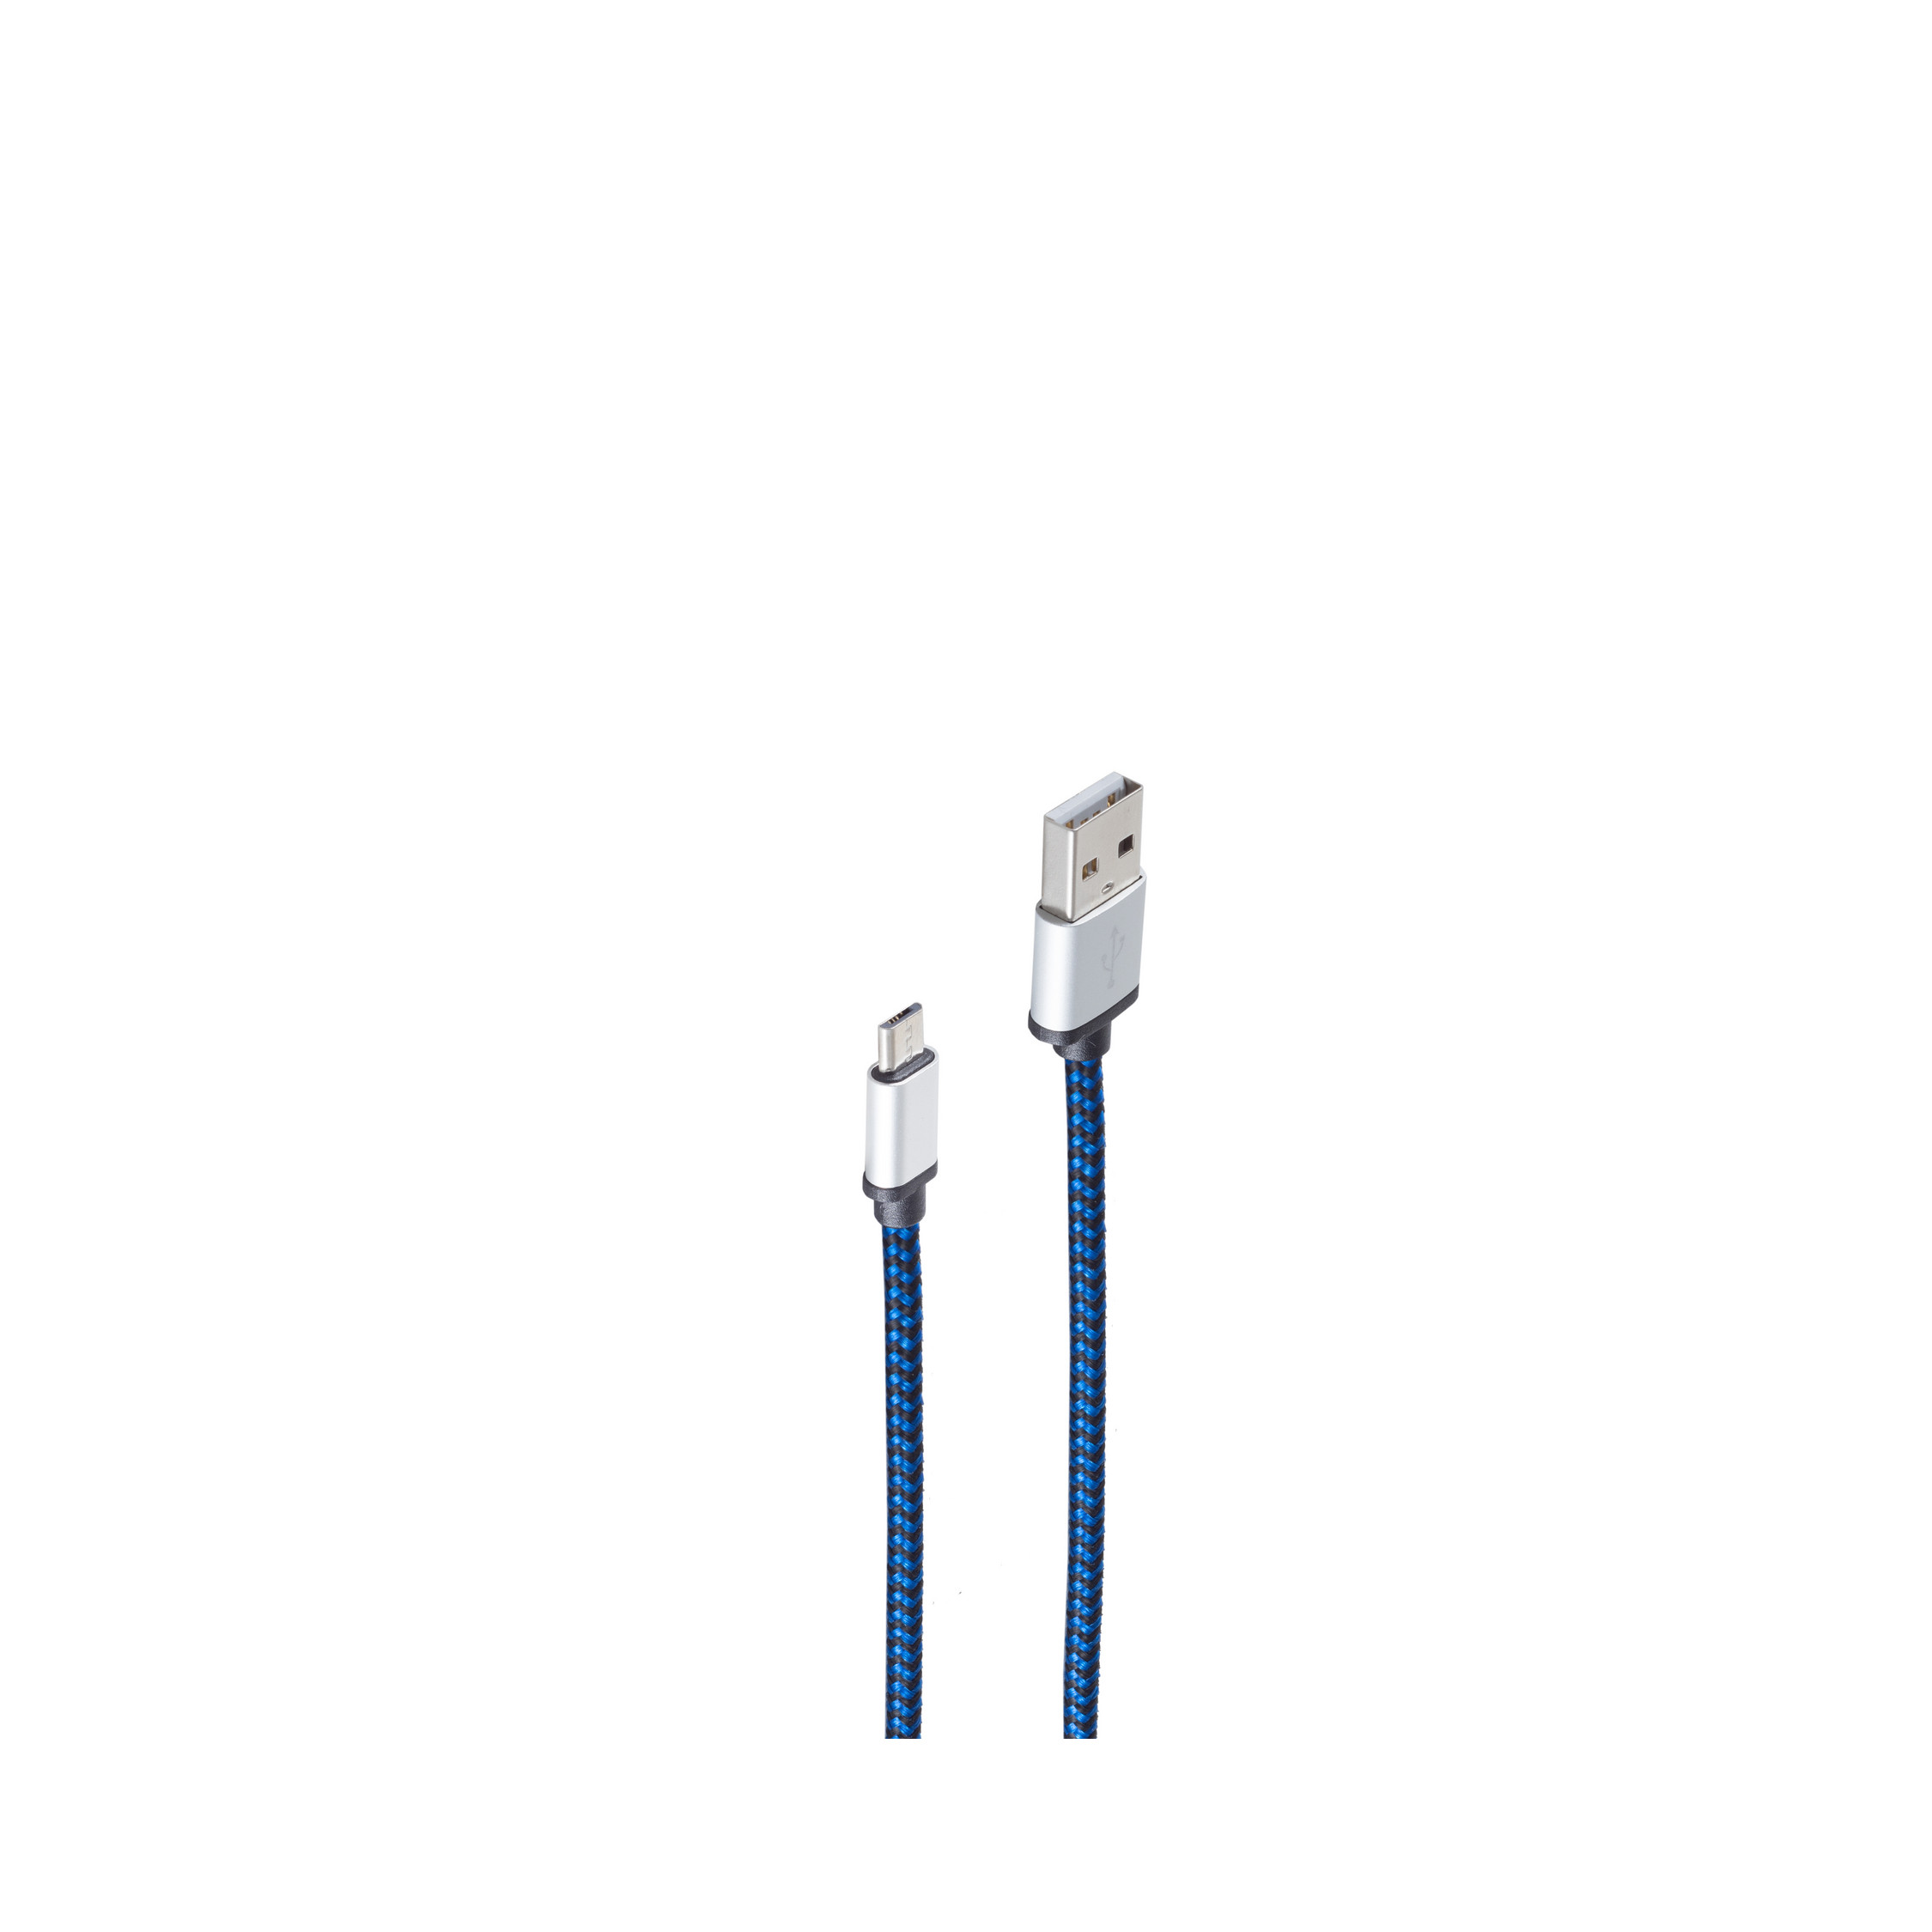 Stecker 2 Micro A Ladekabel, blau USB auf USB-Ladekabel blau SHIVERPEAKS 2m, m, USB B,